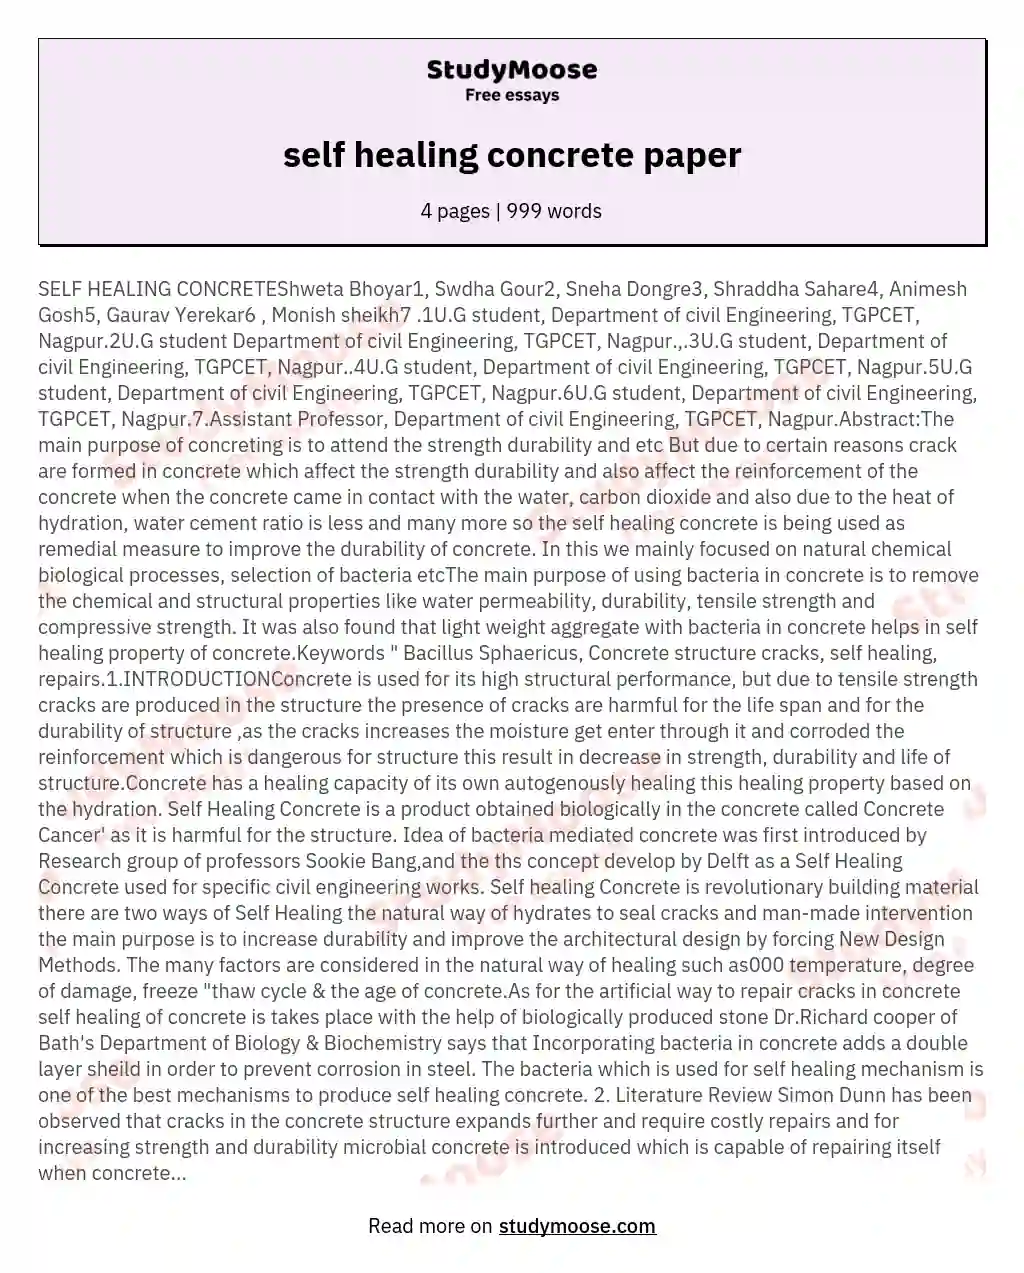 self healing concrete paper essay